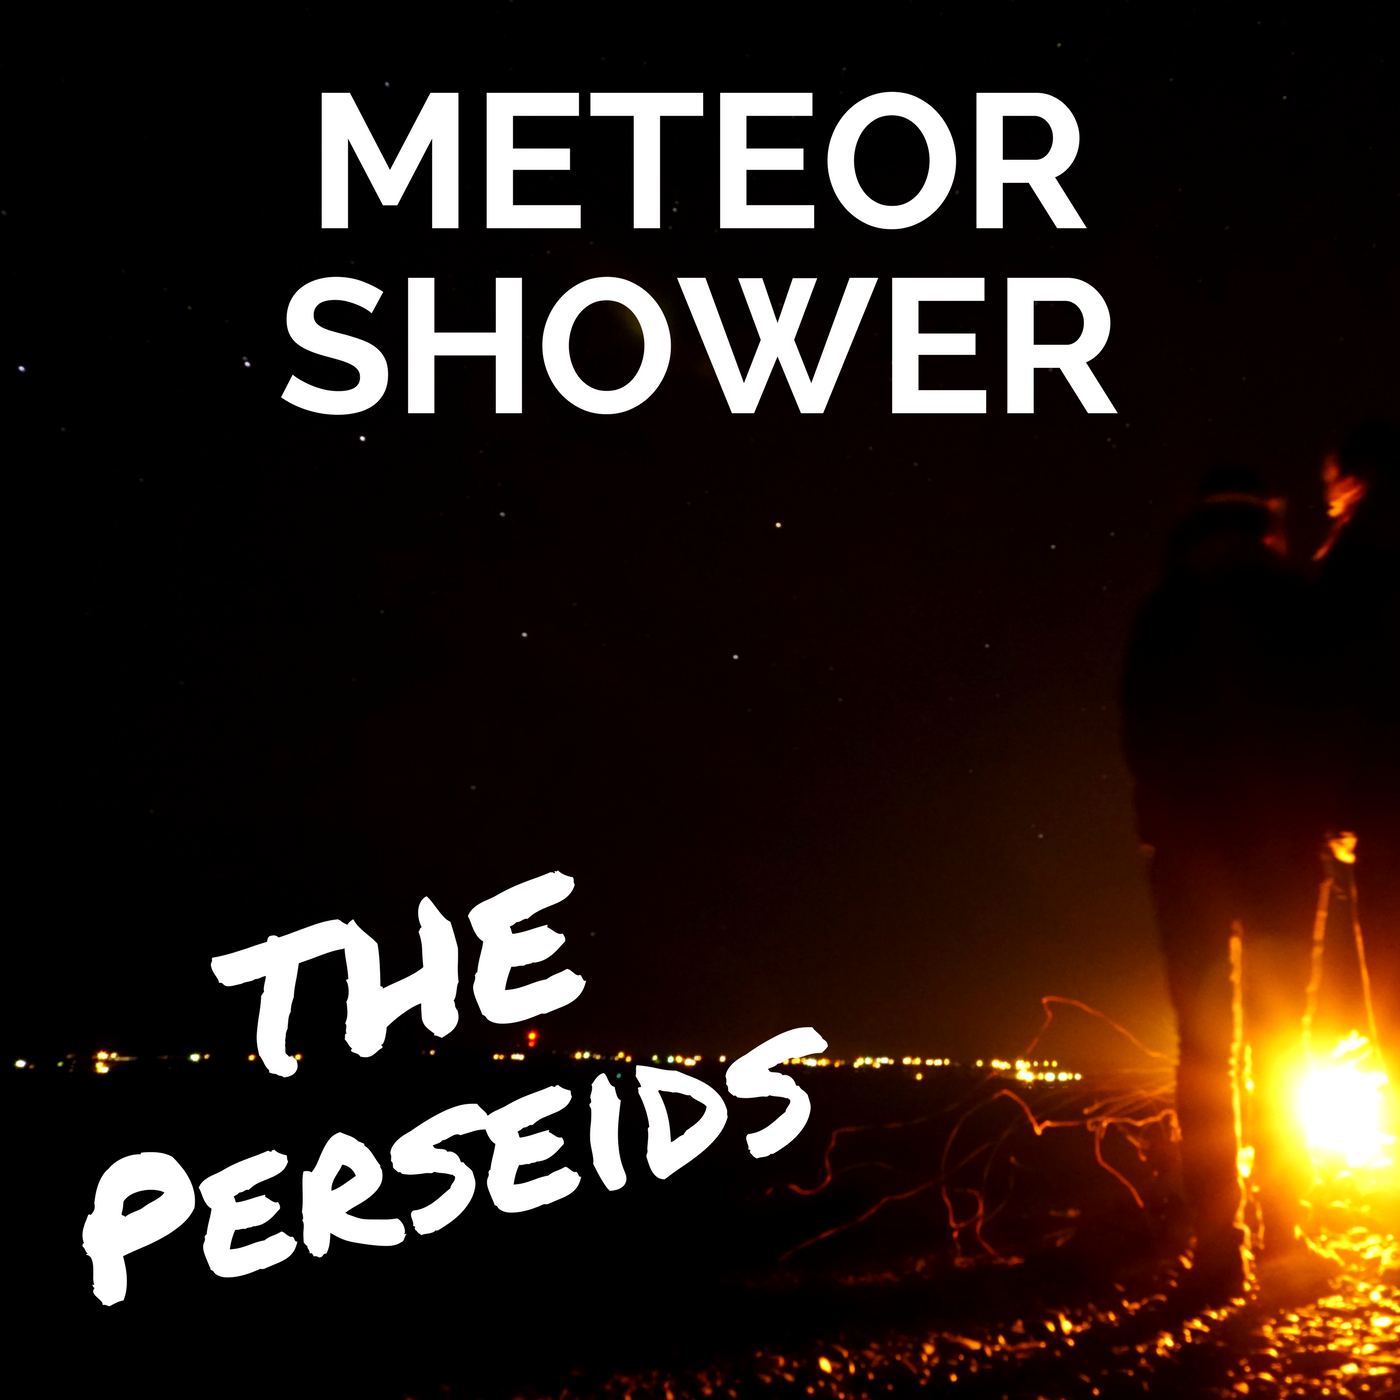 Meteor Shower, the Perseids, Wildly Intrepid